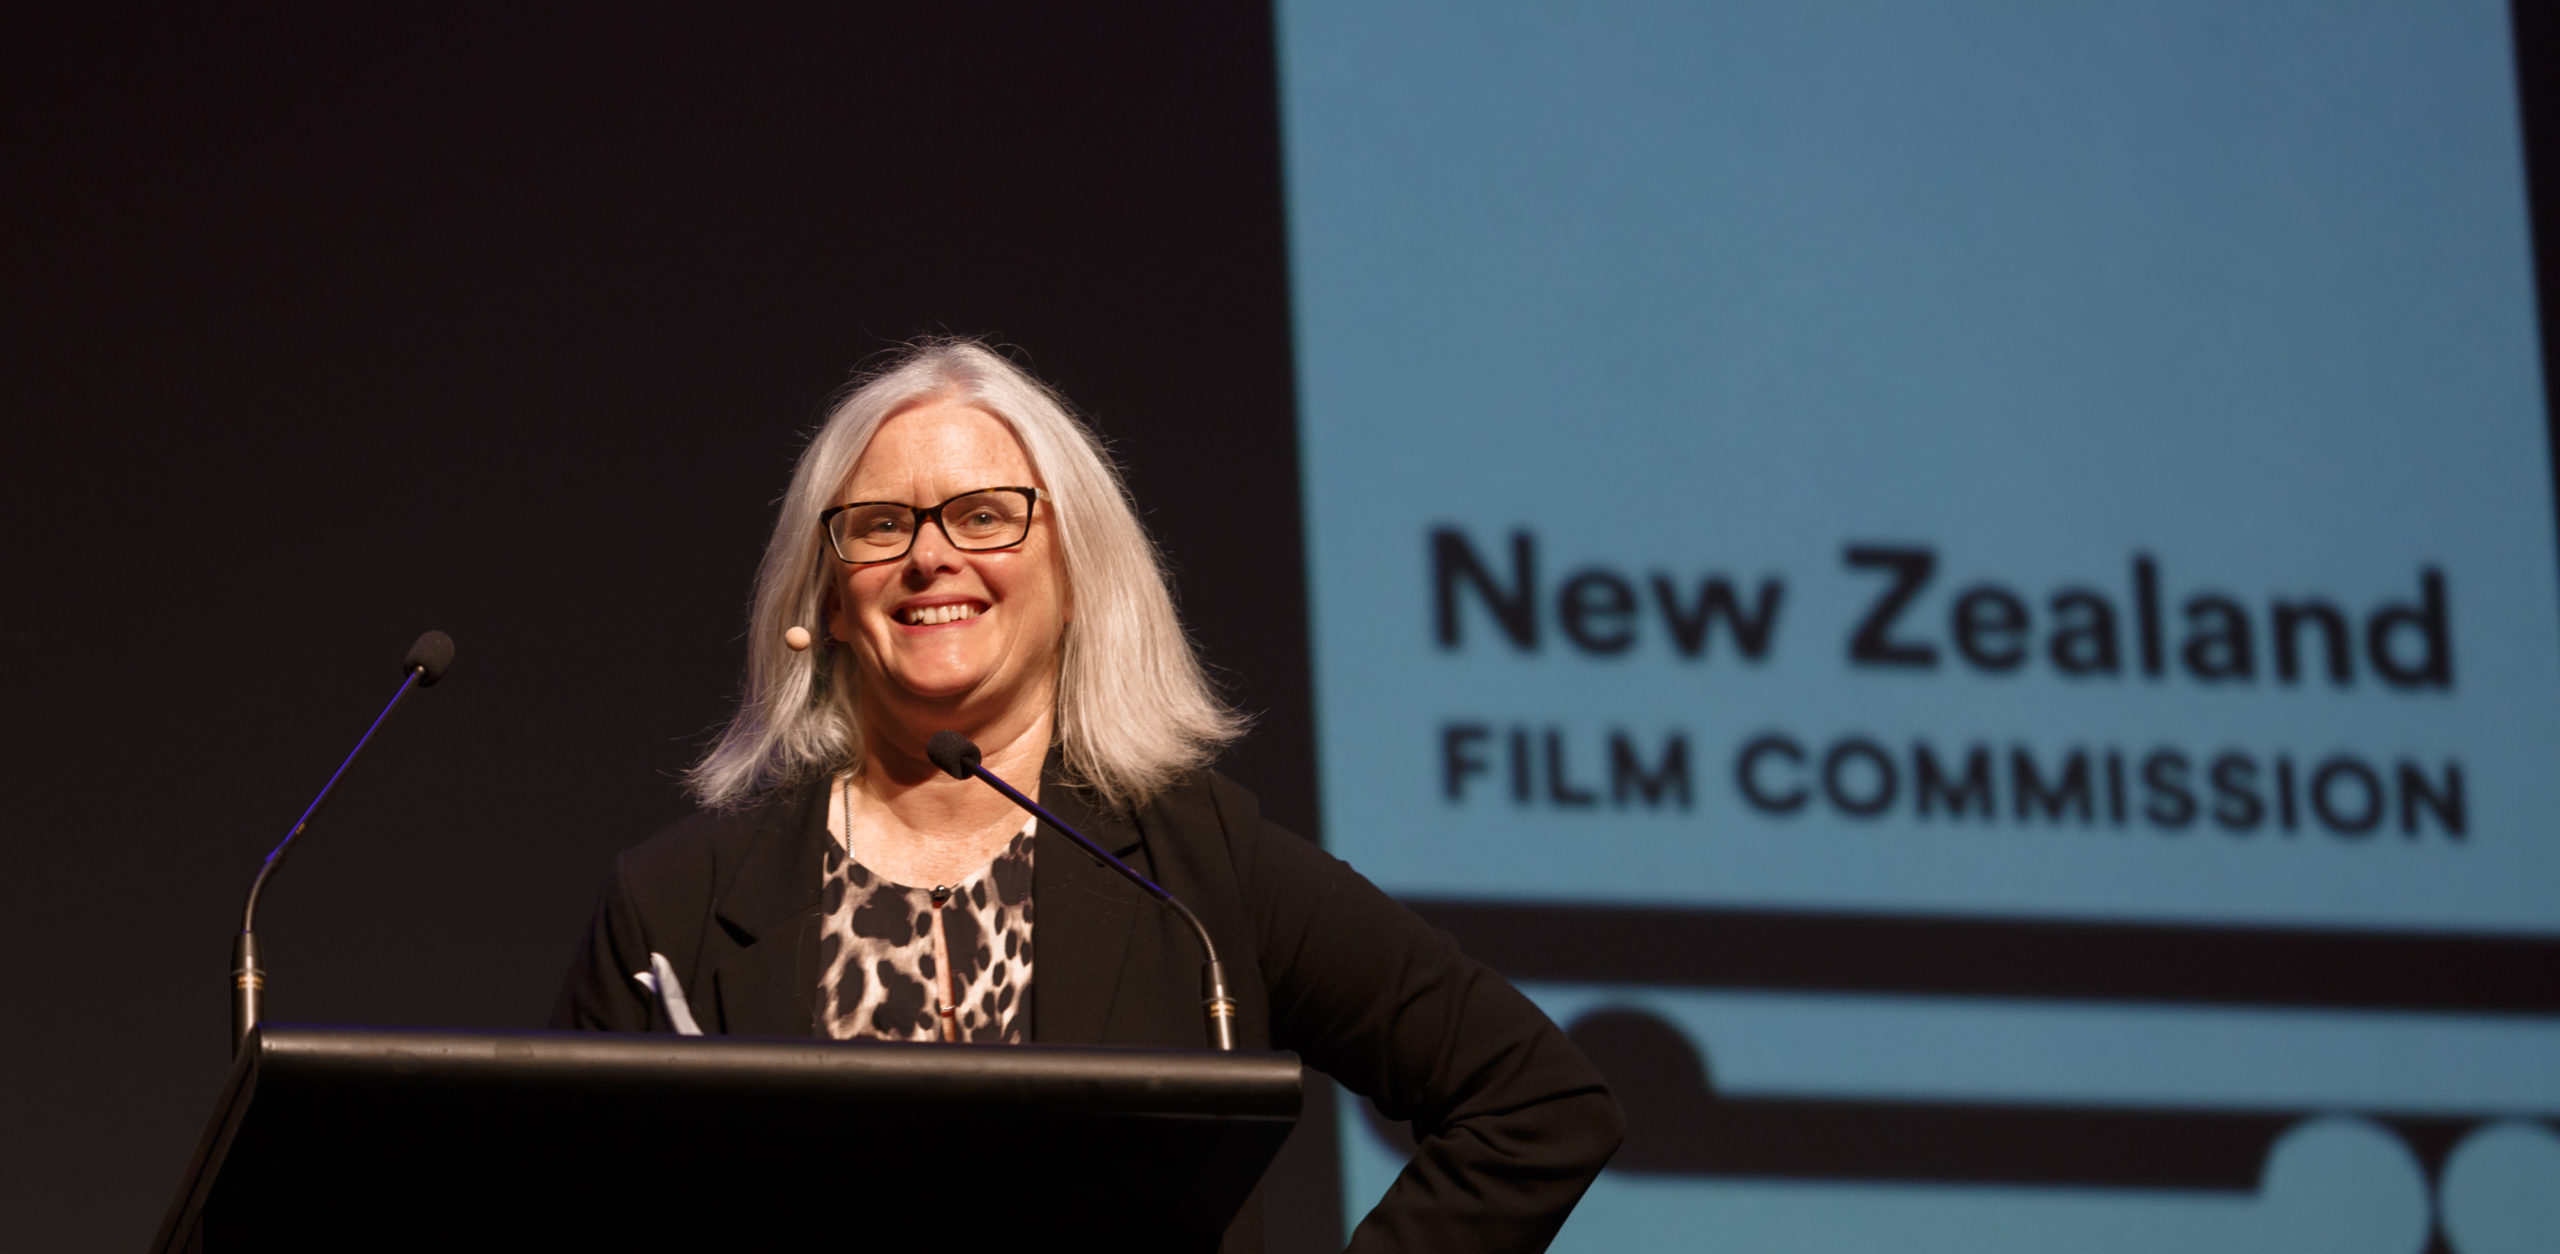 NZ FILM COMMISSION PRESENTATION